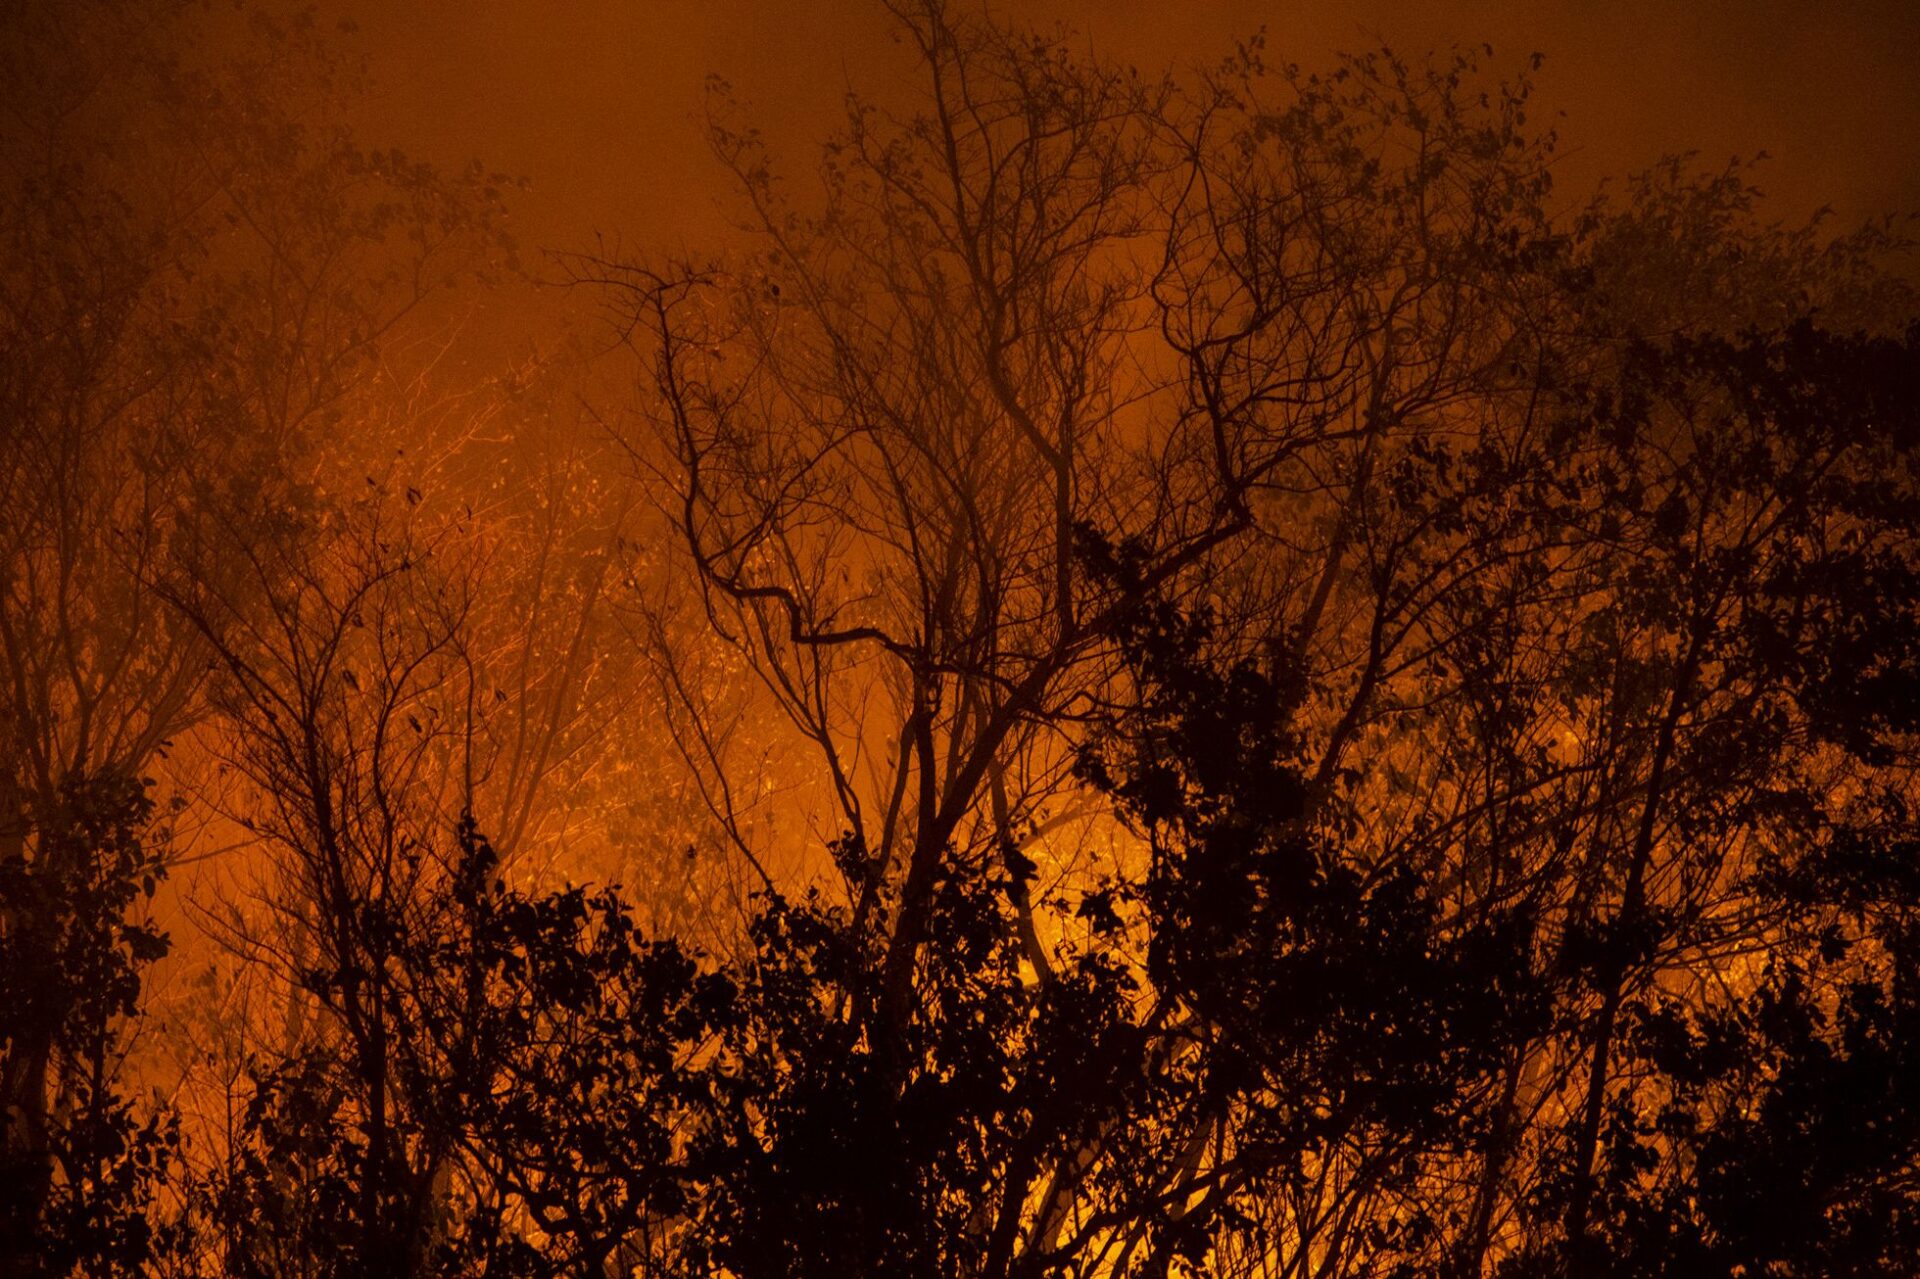 Os 46 hectares engolidos pelo fogo no Parque do Cocó, no Ceará. Foto: Davi Pinheiro/El País